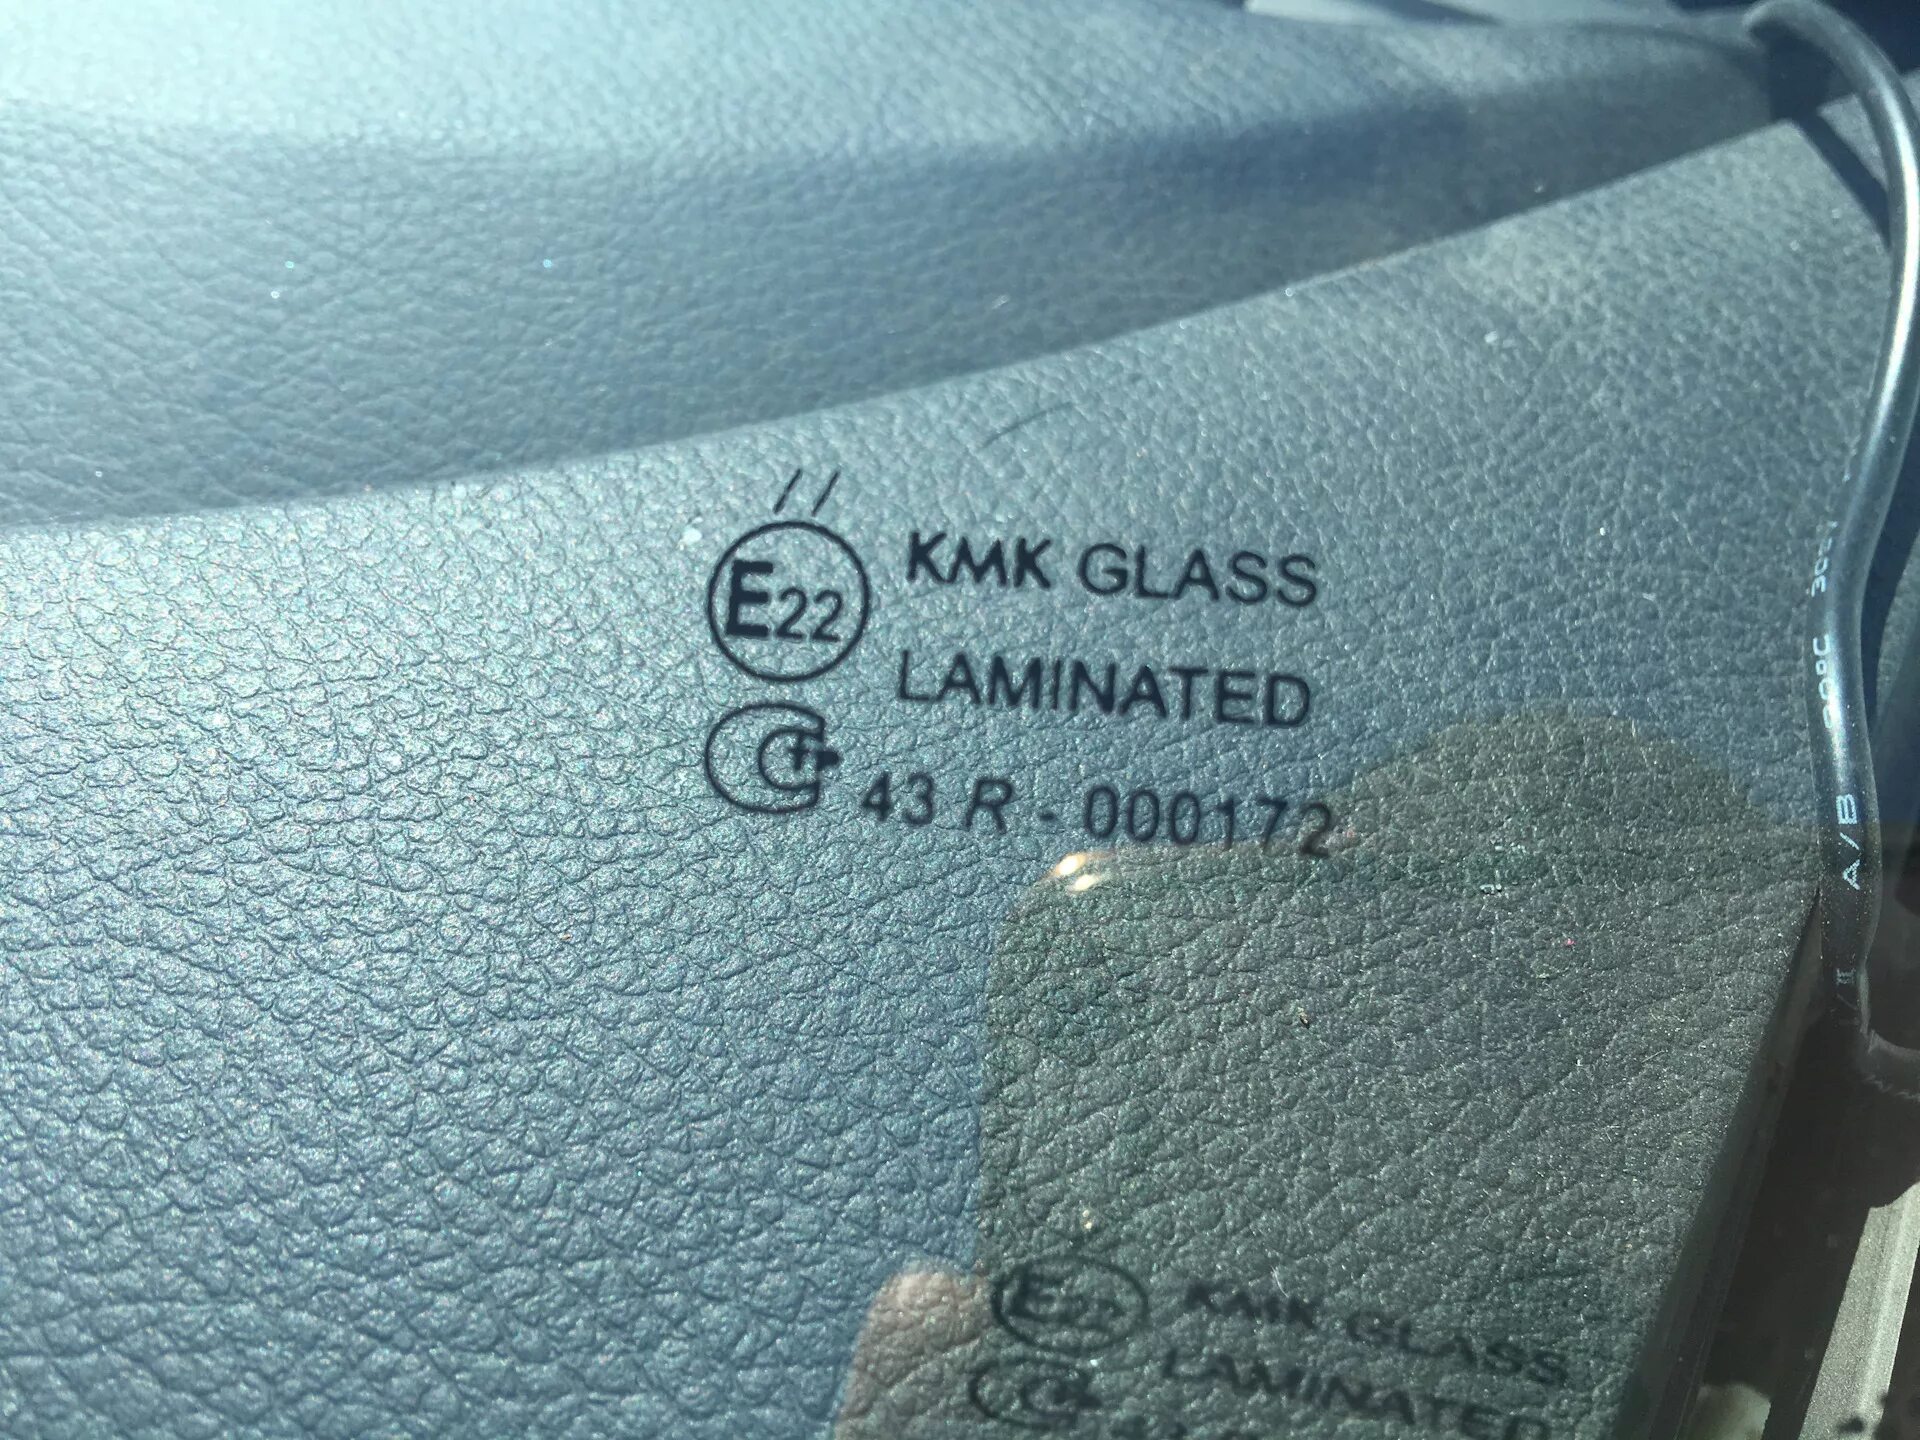 KMK Glass Laminated 43r 000171. KMK Glass vazs0070. Маркировка стекла триплекс. KMK Glass 4166agngn.